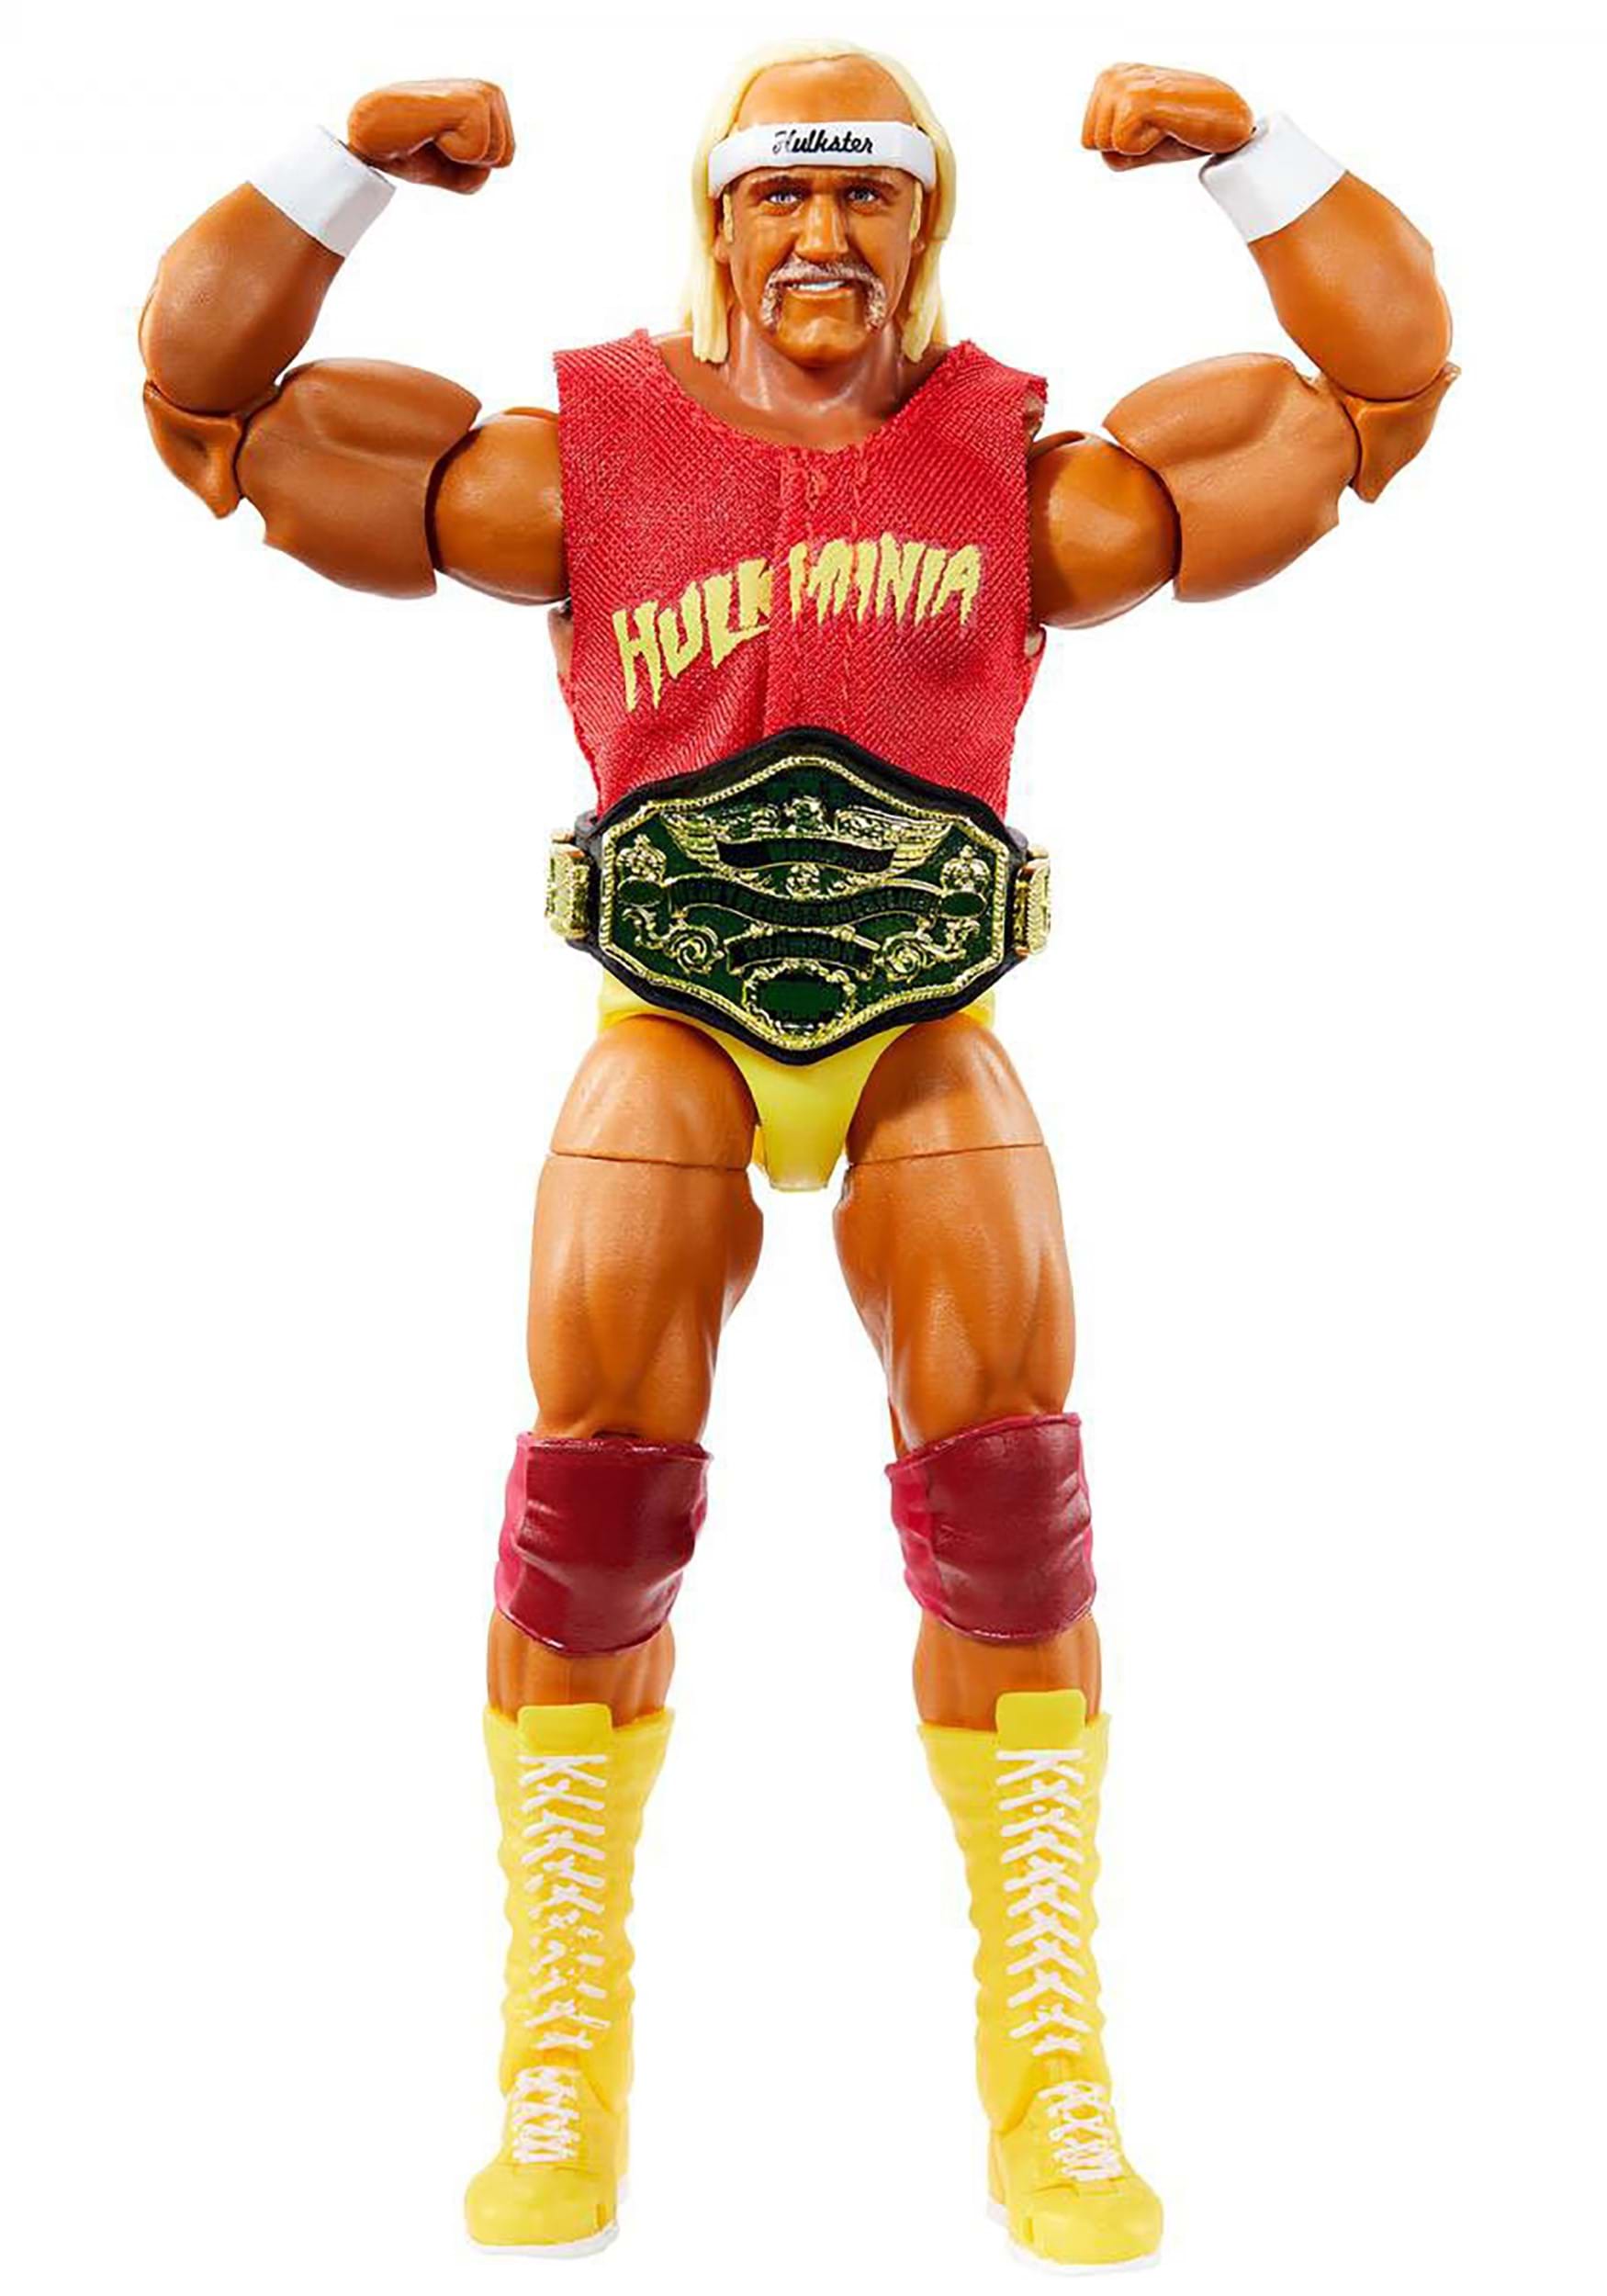 Ultimate Edition Hulk Hogan Wave 13 WWE Action Figure